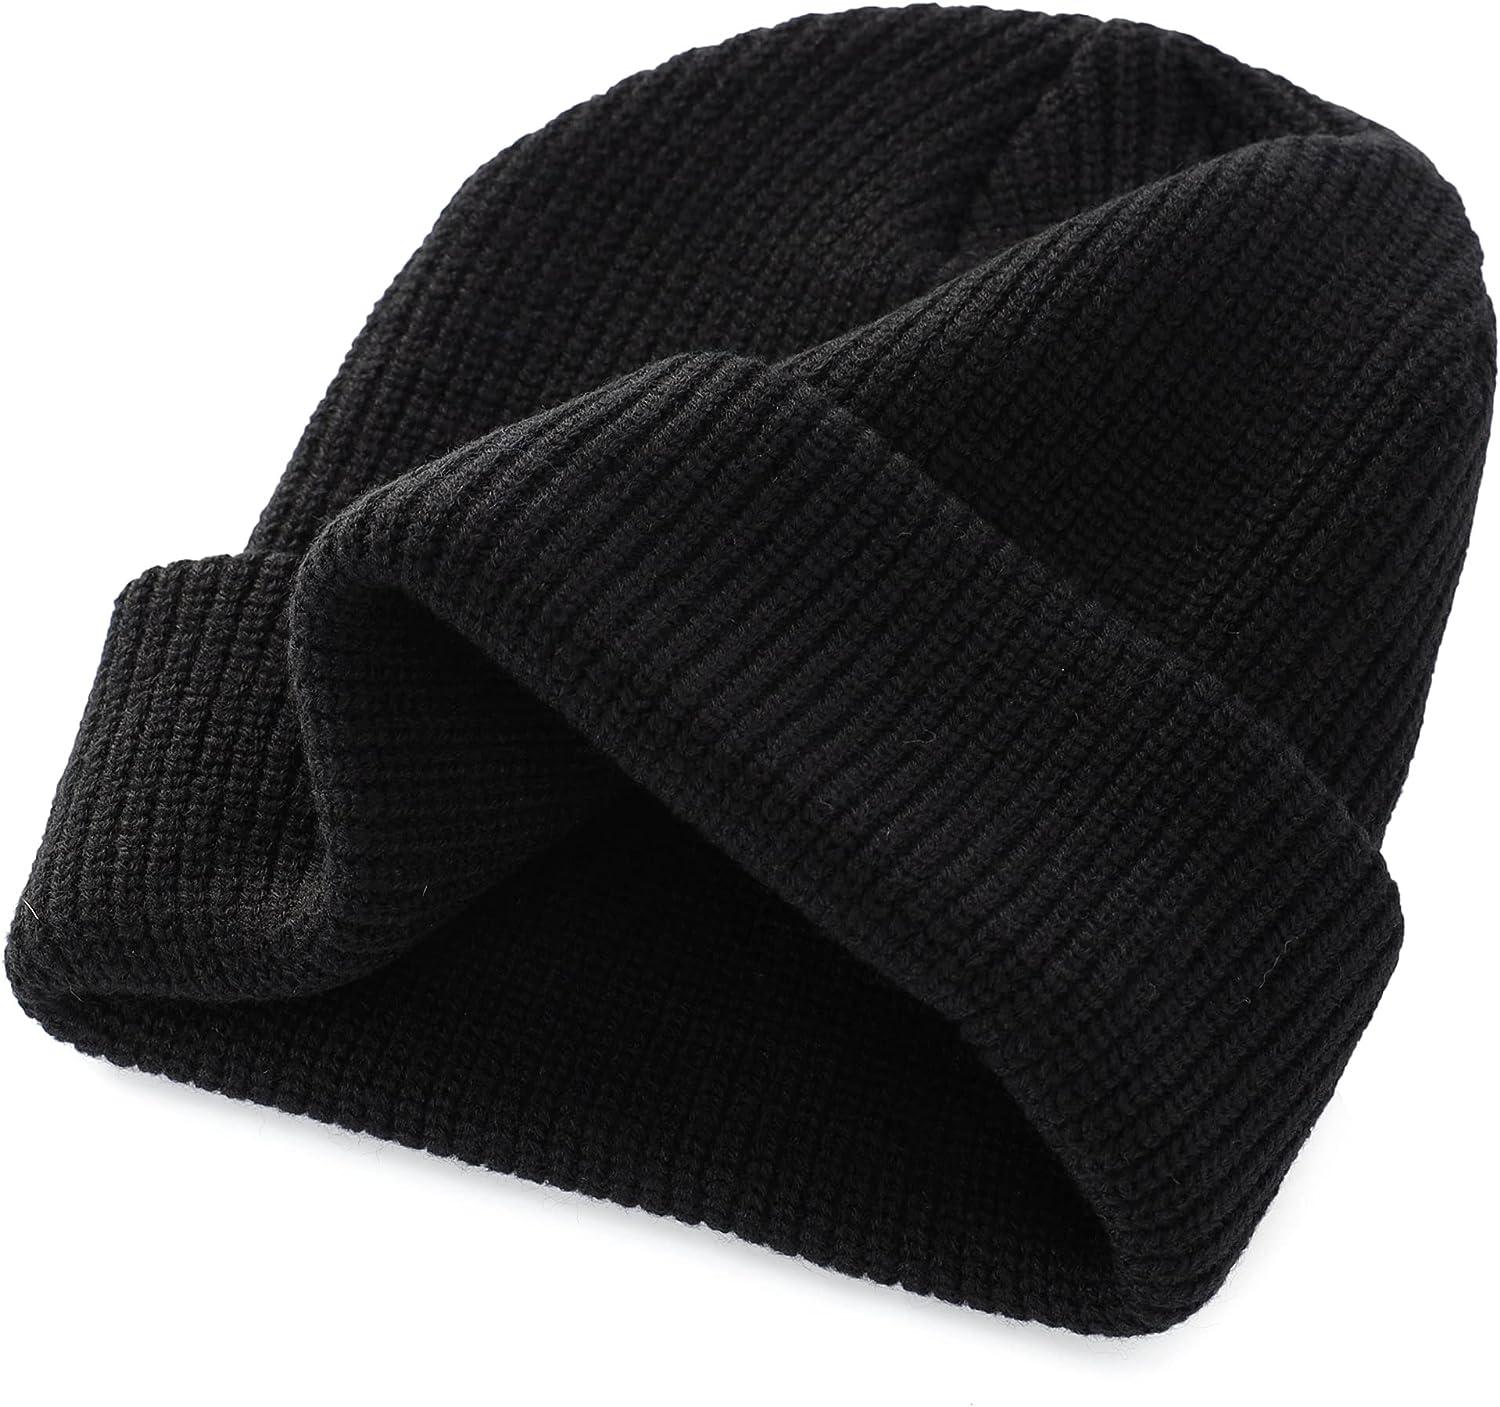 Connectyle Mens Winter Hat with Brim Warm Earflaps Hat Faux Fur Baseball Cap